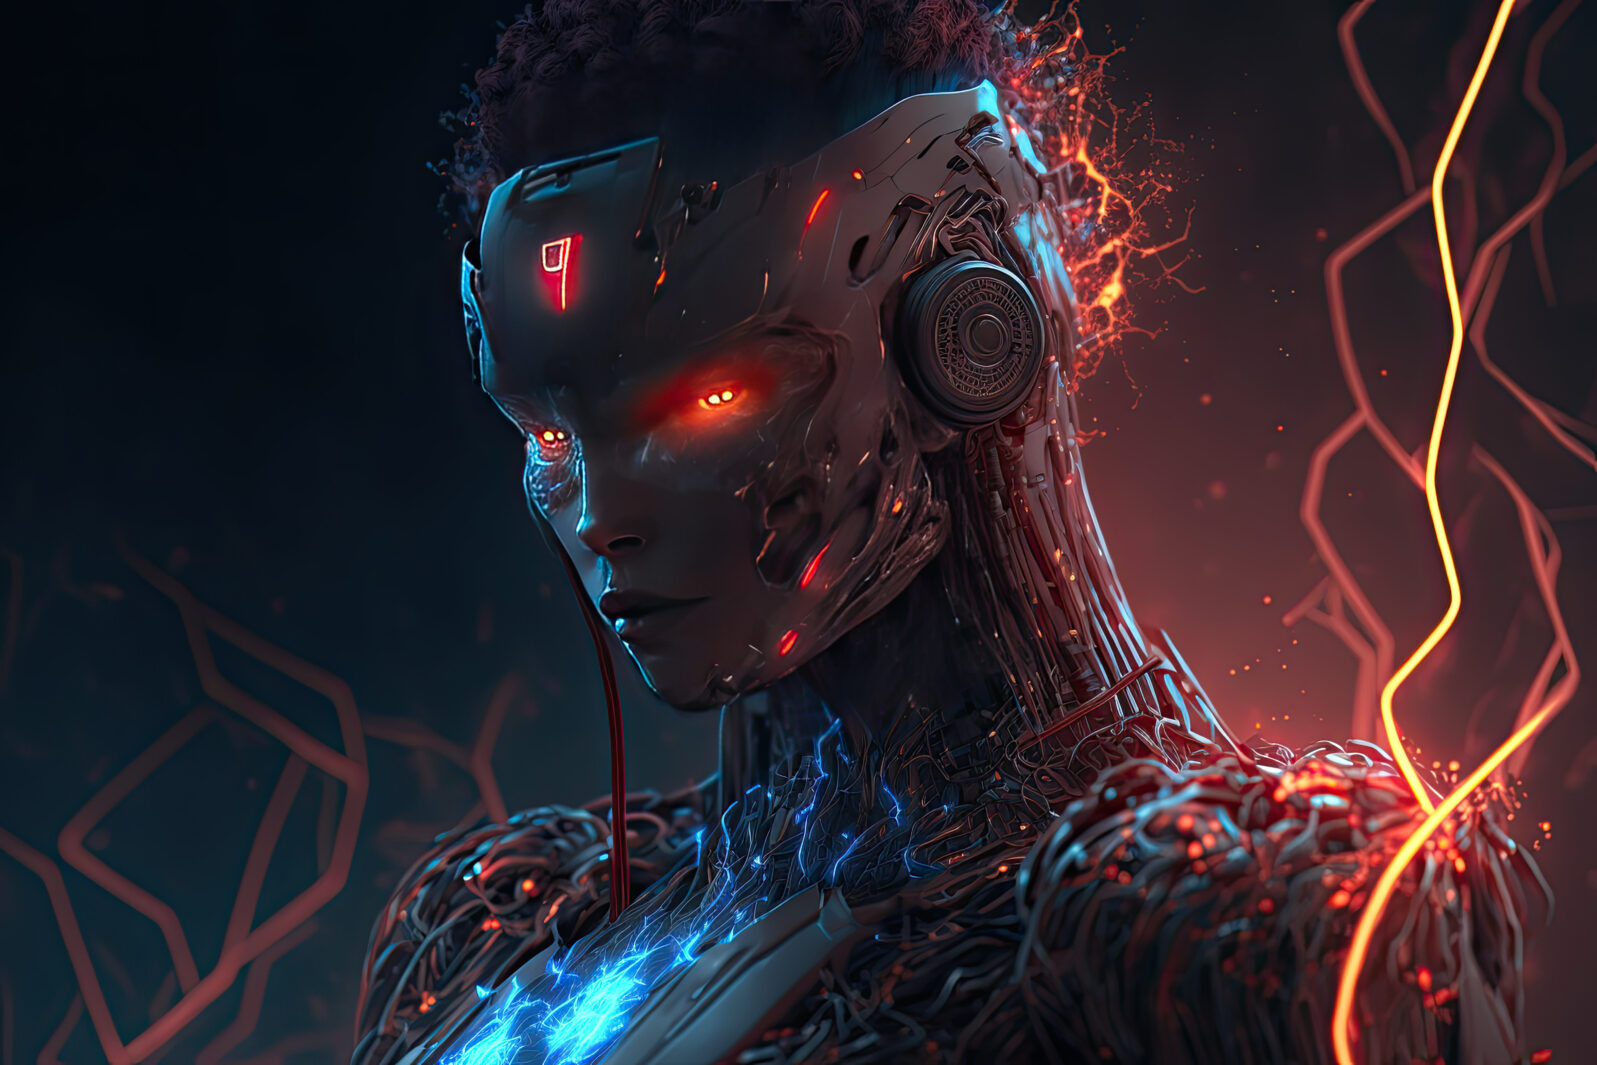 Robot, Machine, Cyborg, Droid, Android, artificial intelligence, AI, computer, chatGPT, technology, internet, technology, advanced, digital, circuit, futuristic, network, light, communication, inform